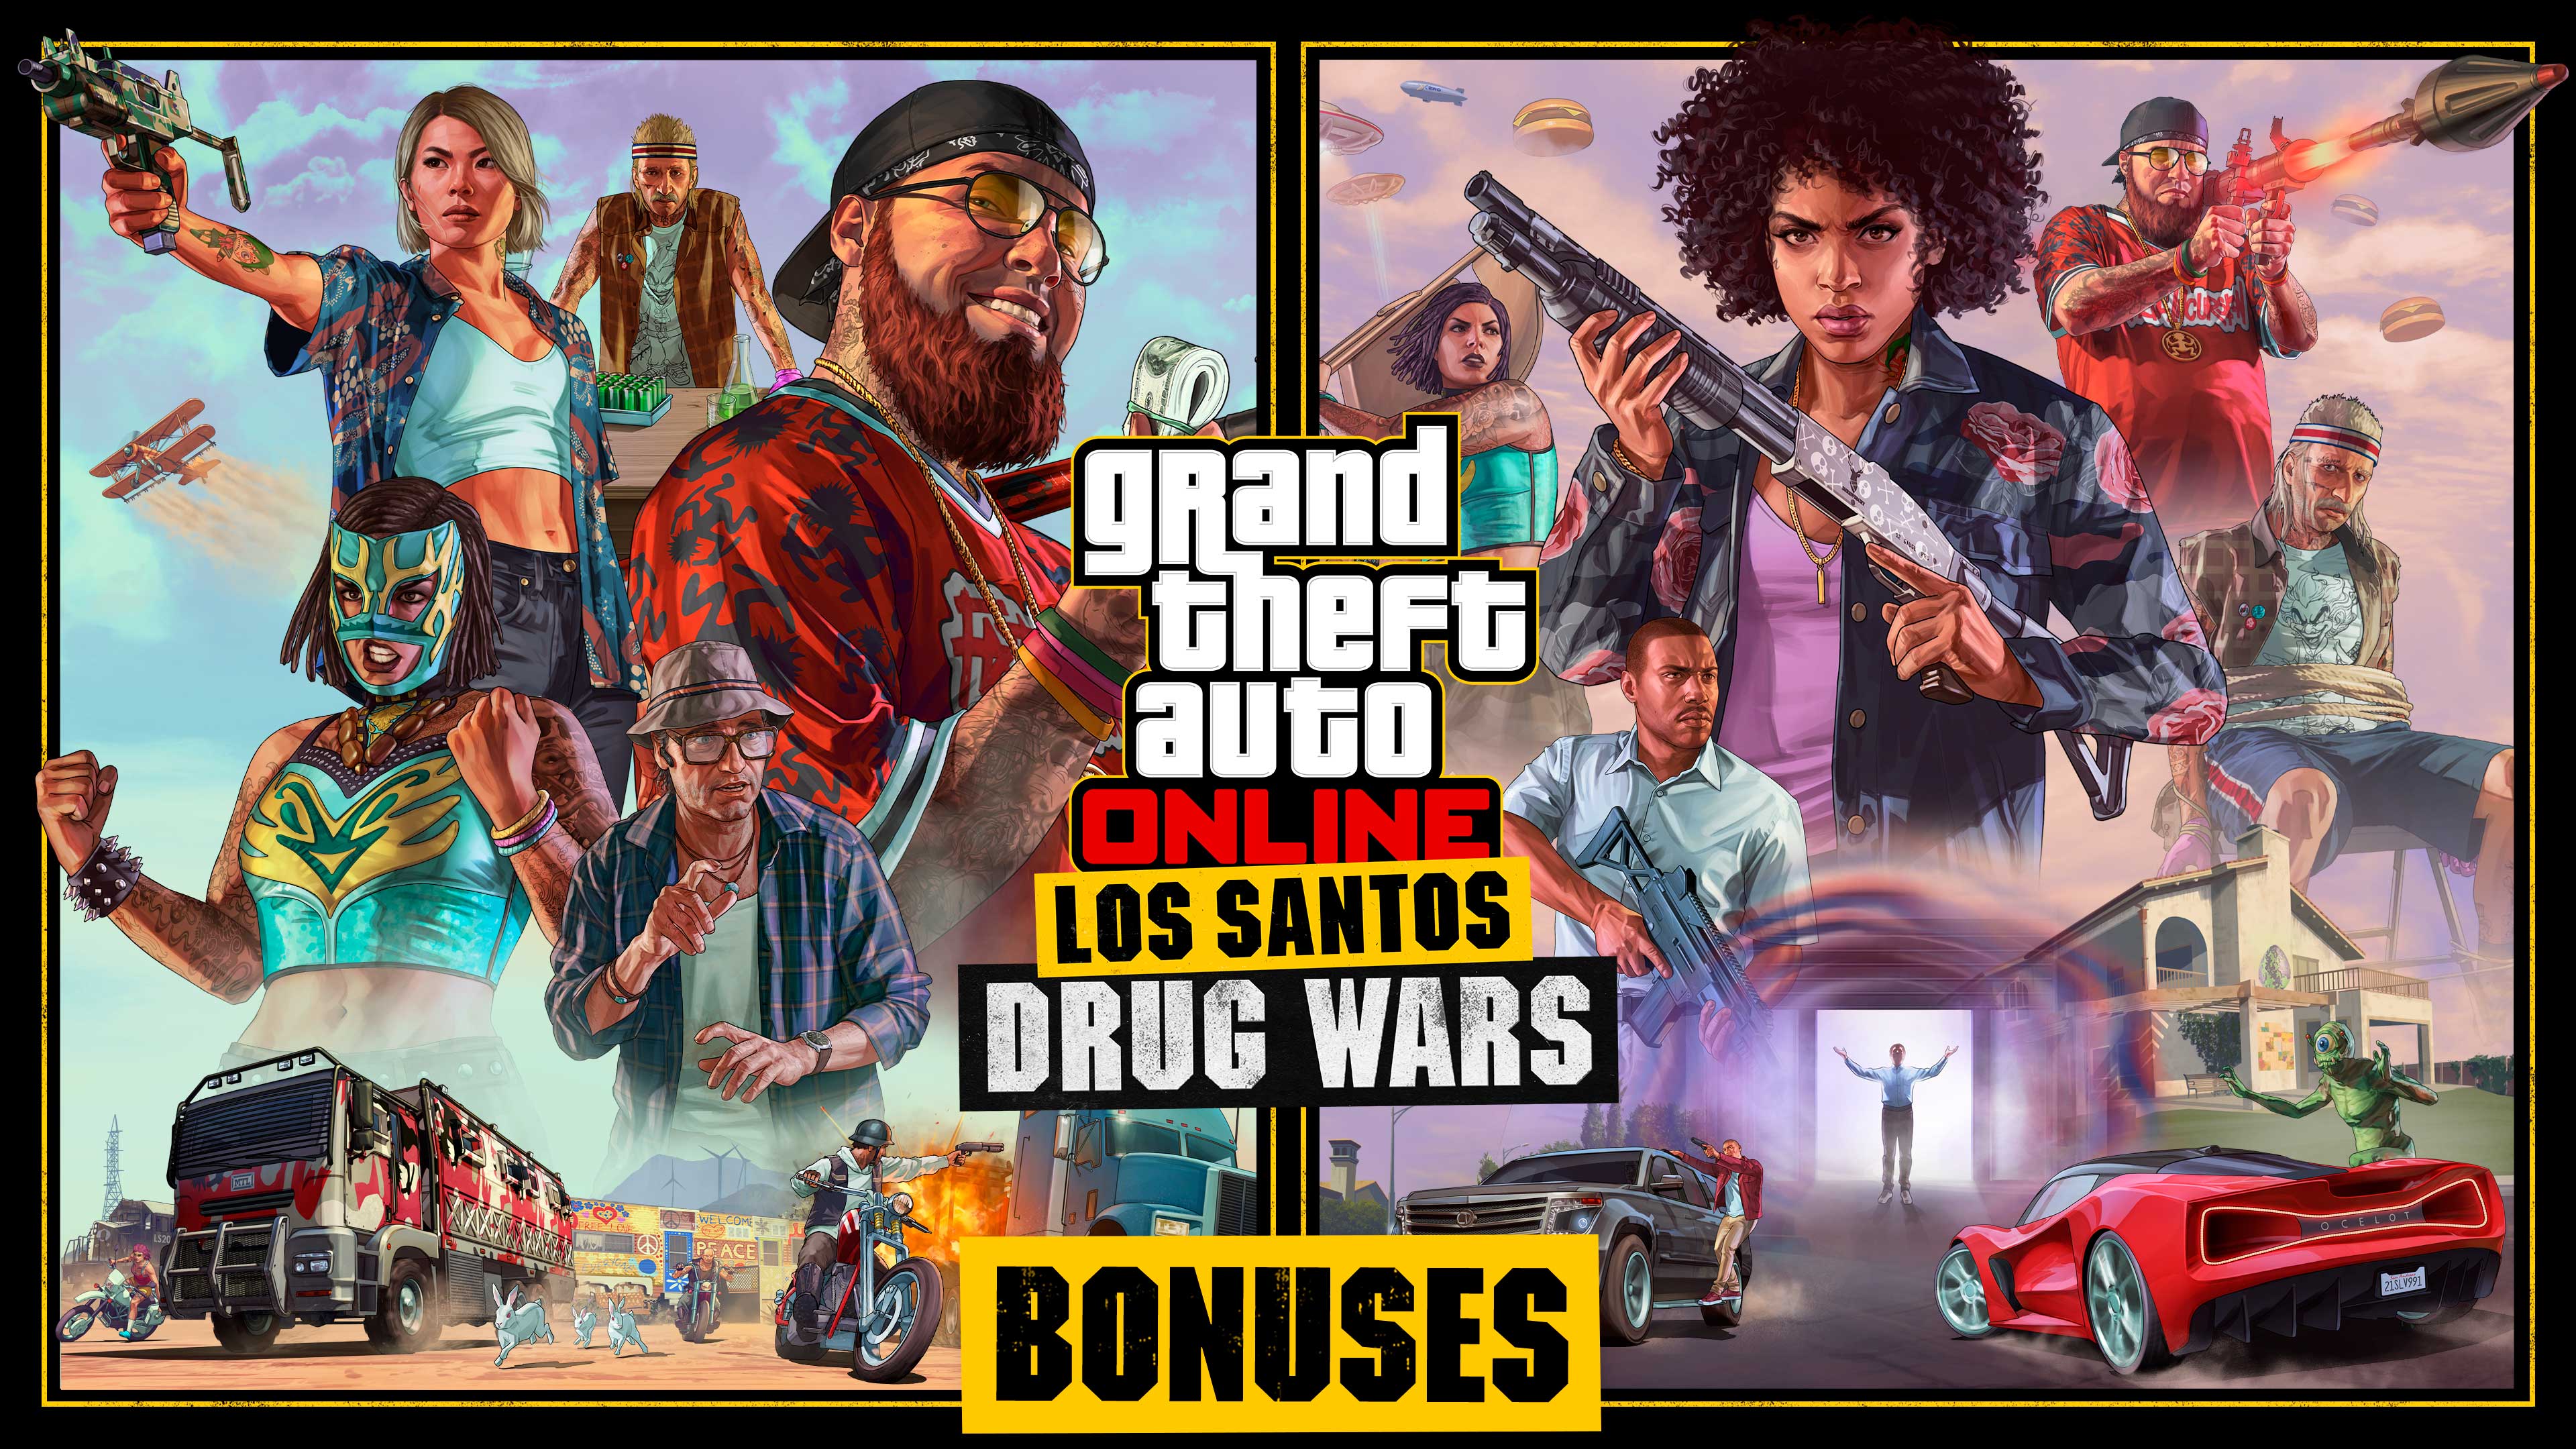 Los Santos Drug Wars comes to GTA Online on December 13